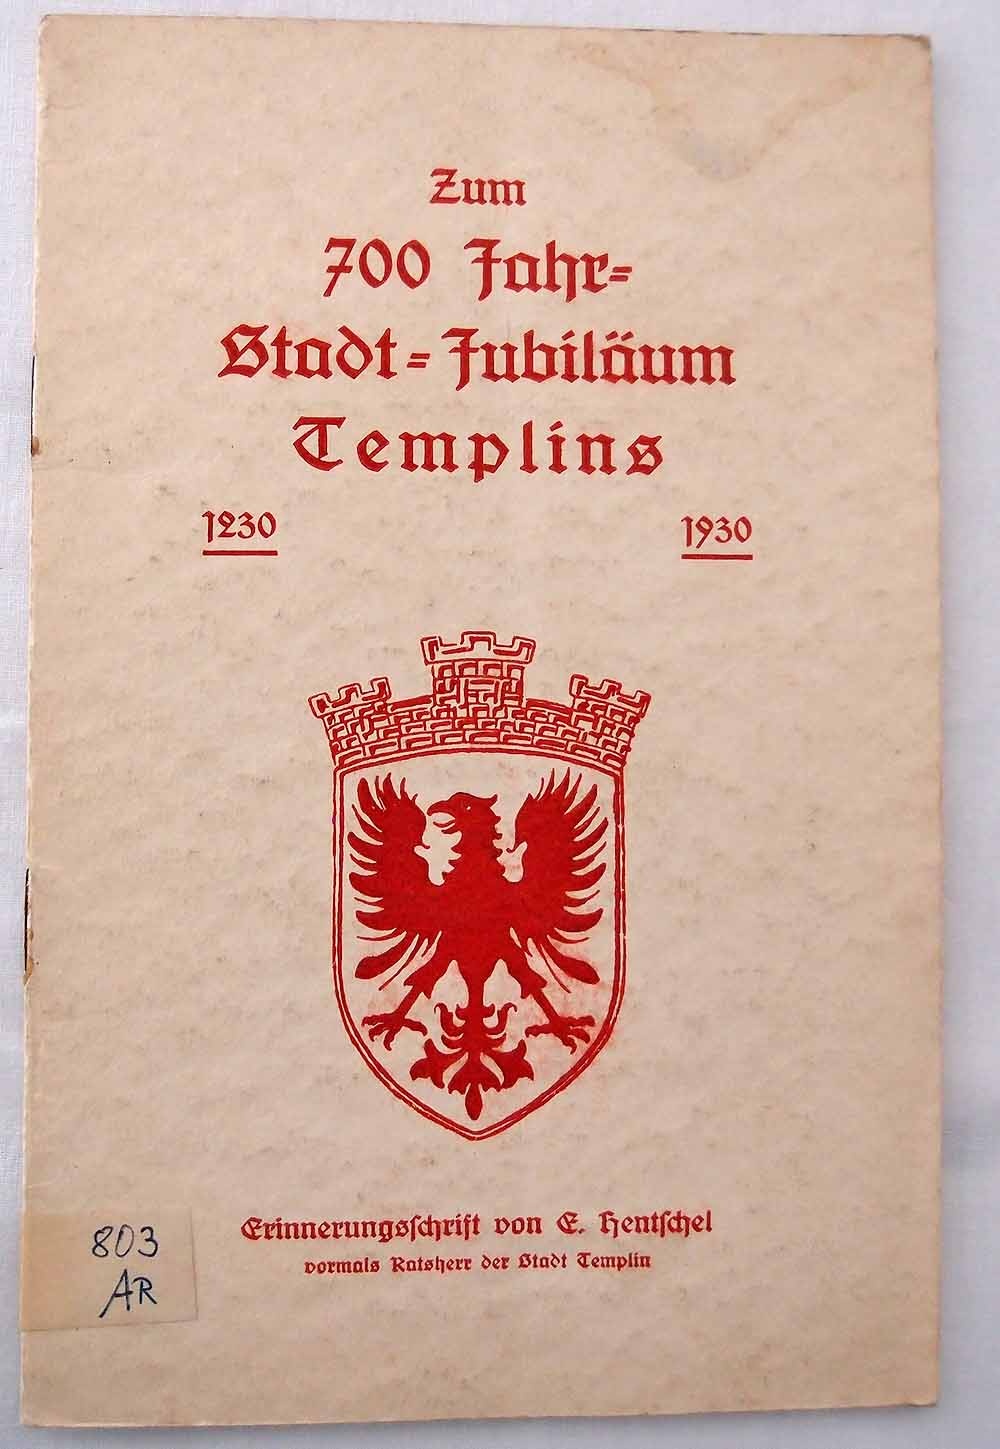 Zum 700-Jahr-Stadt-Jubiläum Templins 1230 - 1930 (Museum für Stadtgeschichte Templin CC BY-NC-SA)